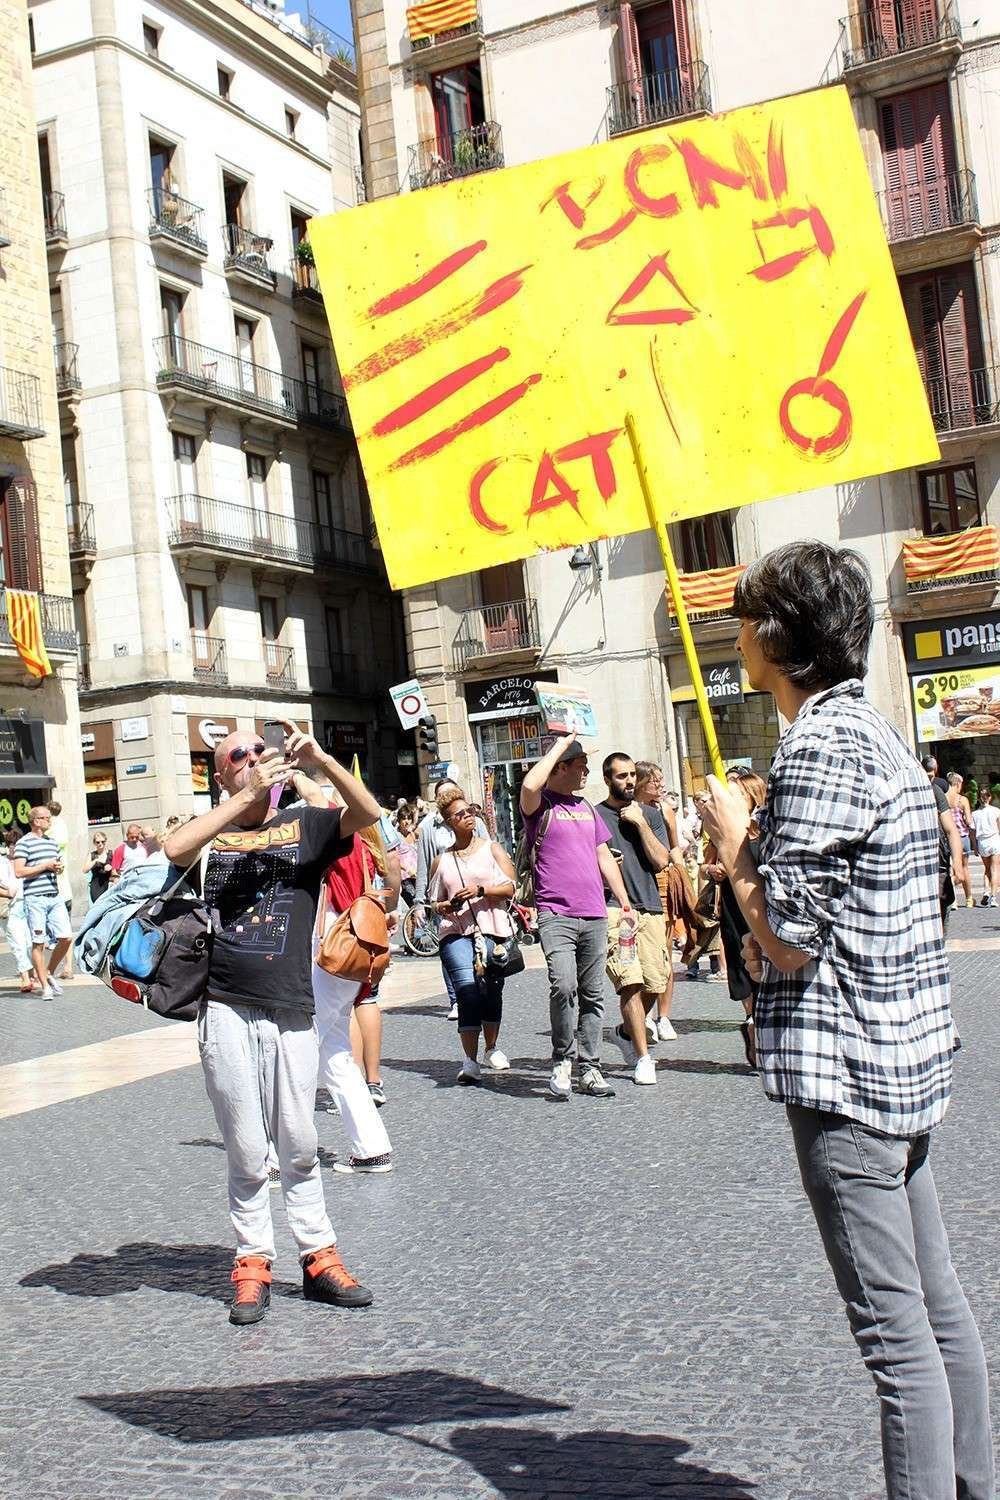 [:en]Miroslavo’s Public Art: Catalunya’s Diada Celebration in Barcelona[:] [:cs]Veřejné umění Miroslava: Oslavy Diada v Barceloně, Catalunya[:] [:es]Celebración Diada de Catalunya en Barcelona[:]